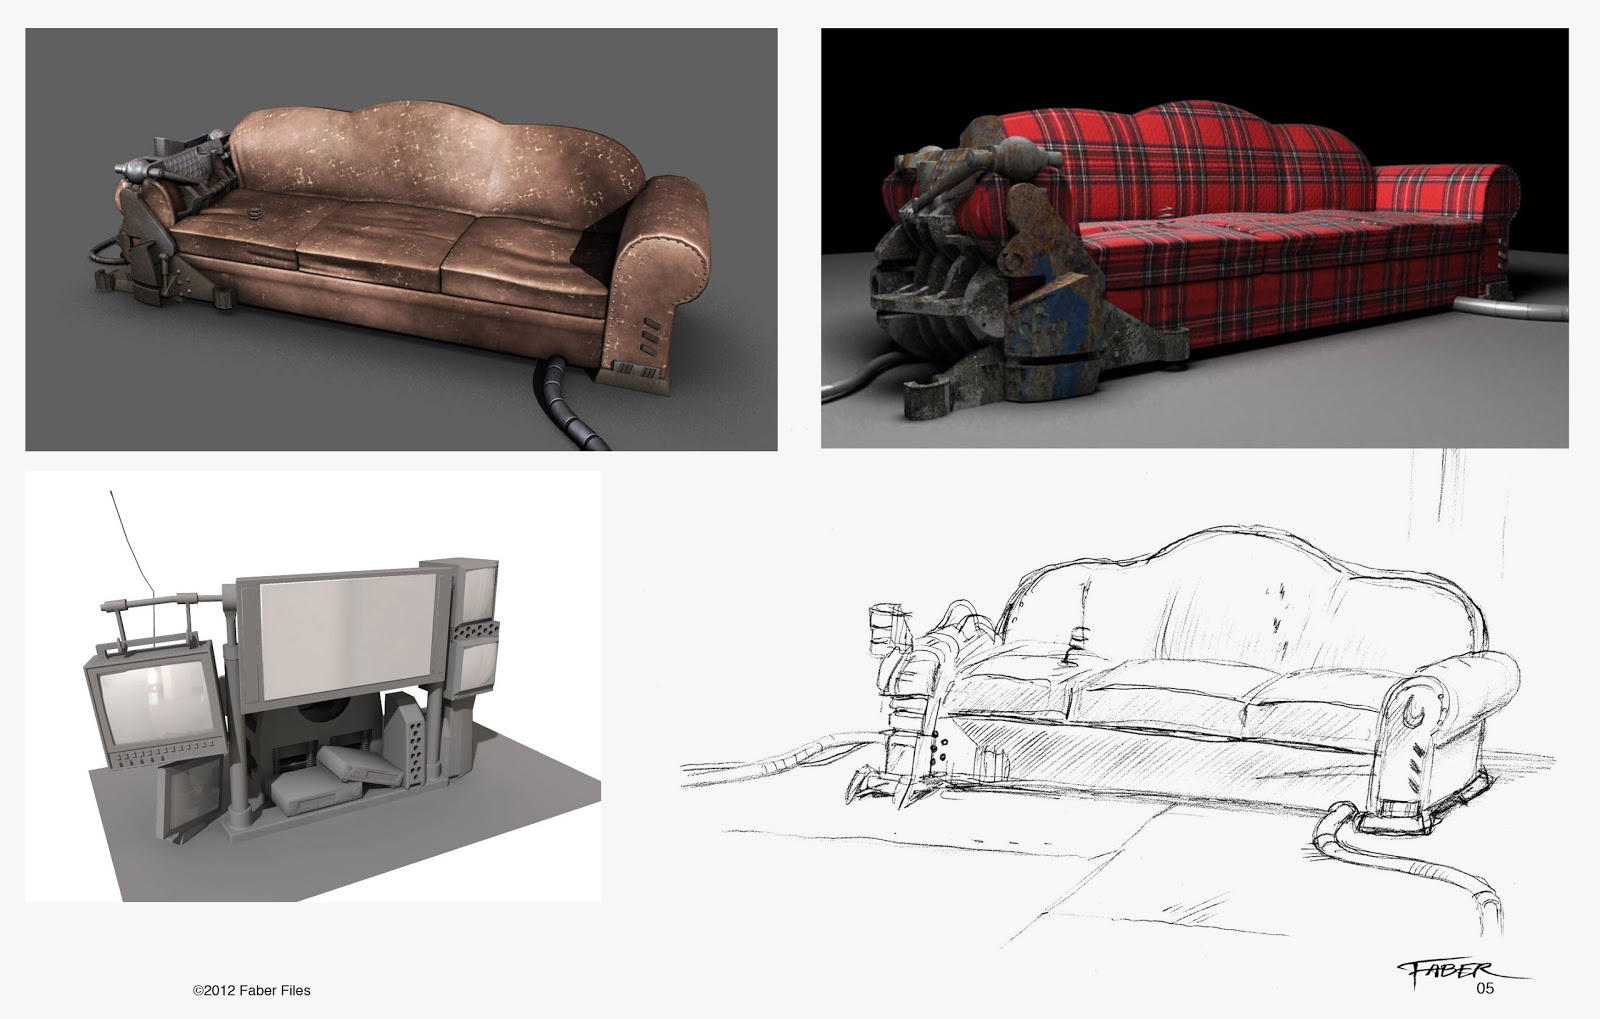 Bionicle Concept Arts - Página 4 Christian+Faber+Files_Piraka+sofa